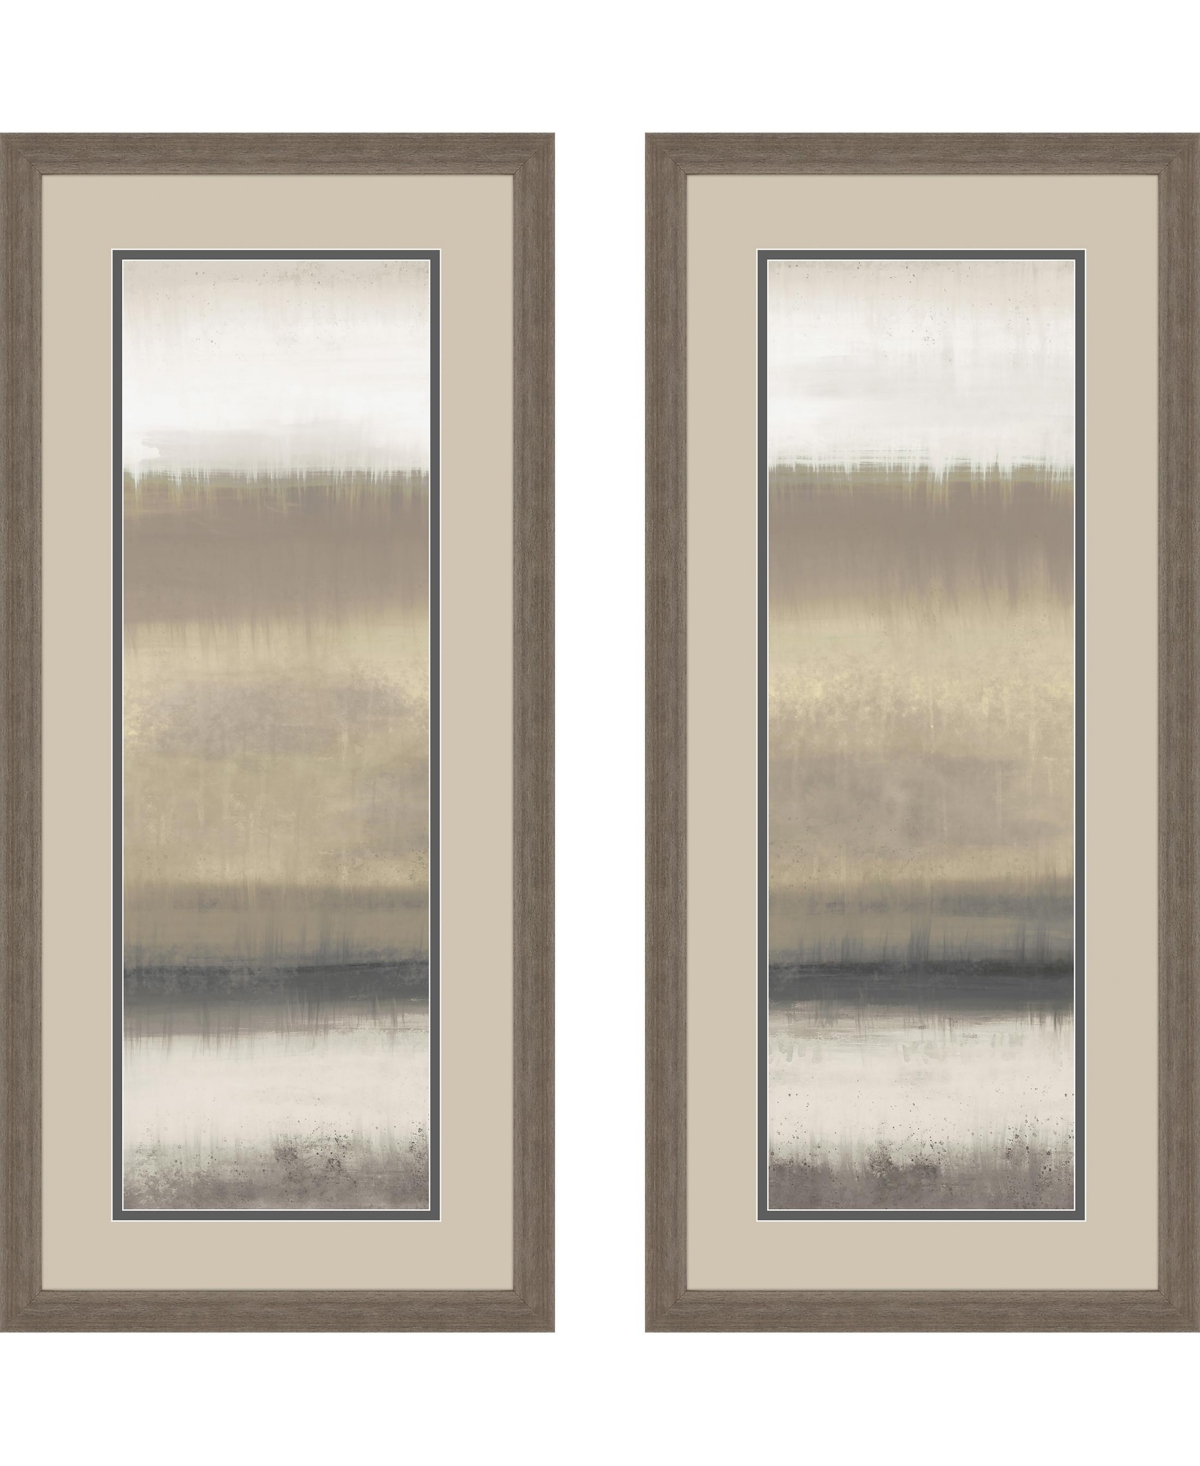 Paragon Picture Gallery Neutral Sandbar Panel Framed Art, Set Of 2 In Gray